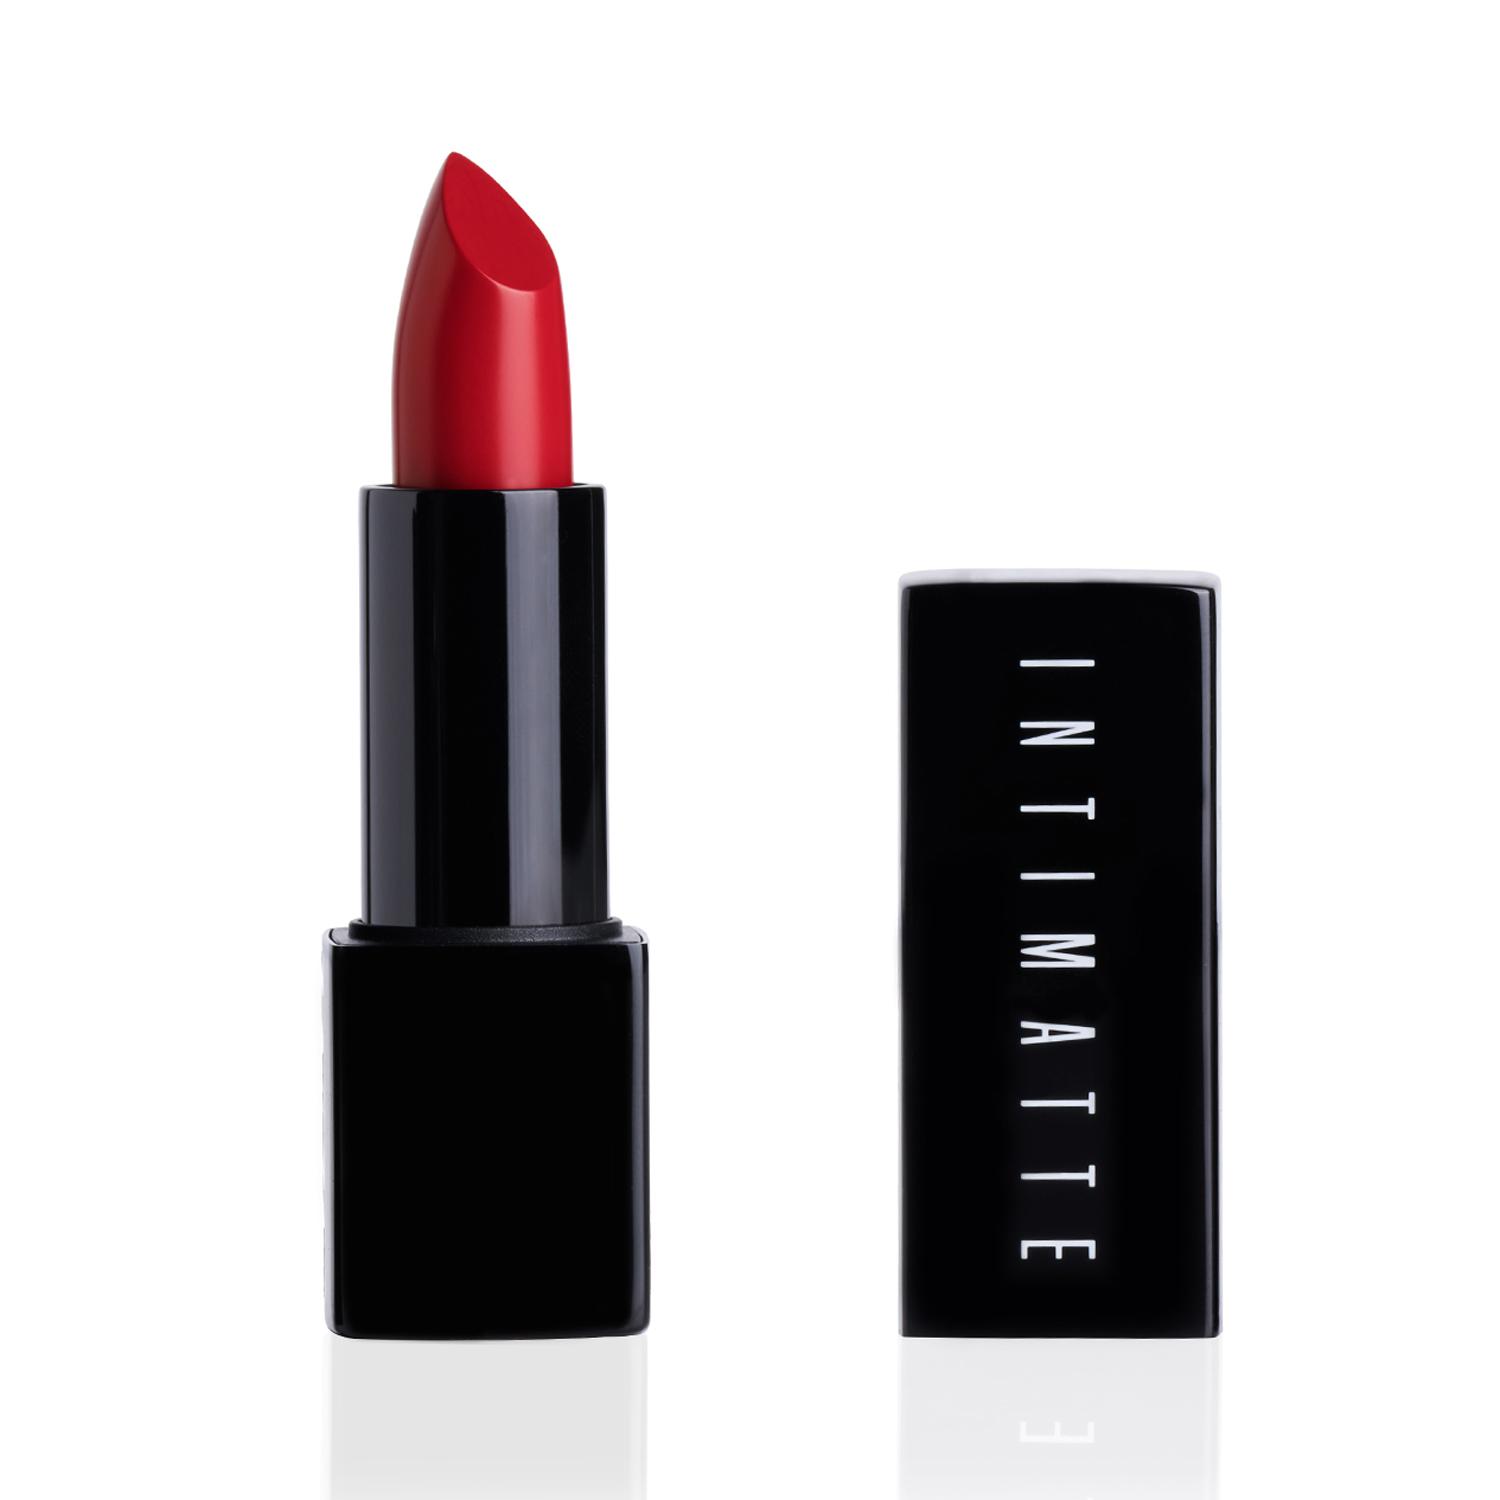 PAC | PAC Intimatte Lipstick - Red Craze (4g)